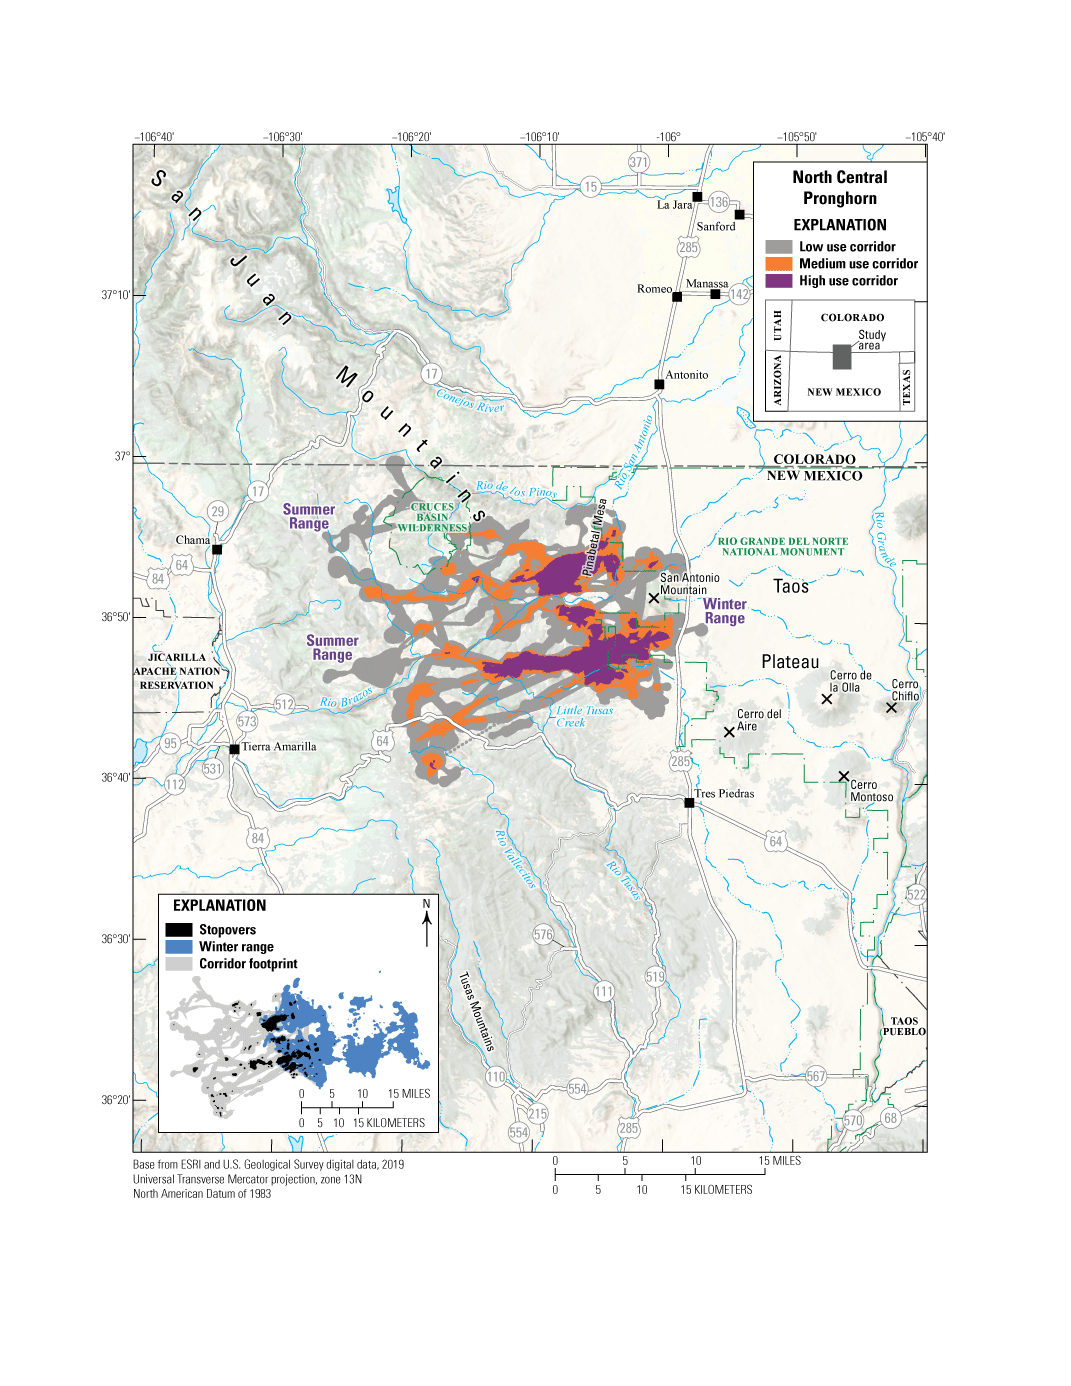 Figure 37. Migration corridors, stopovers, and winter ranges.